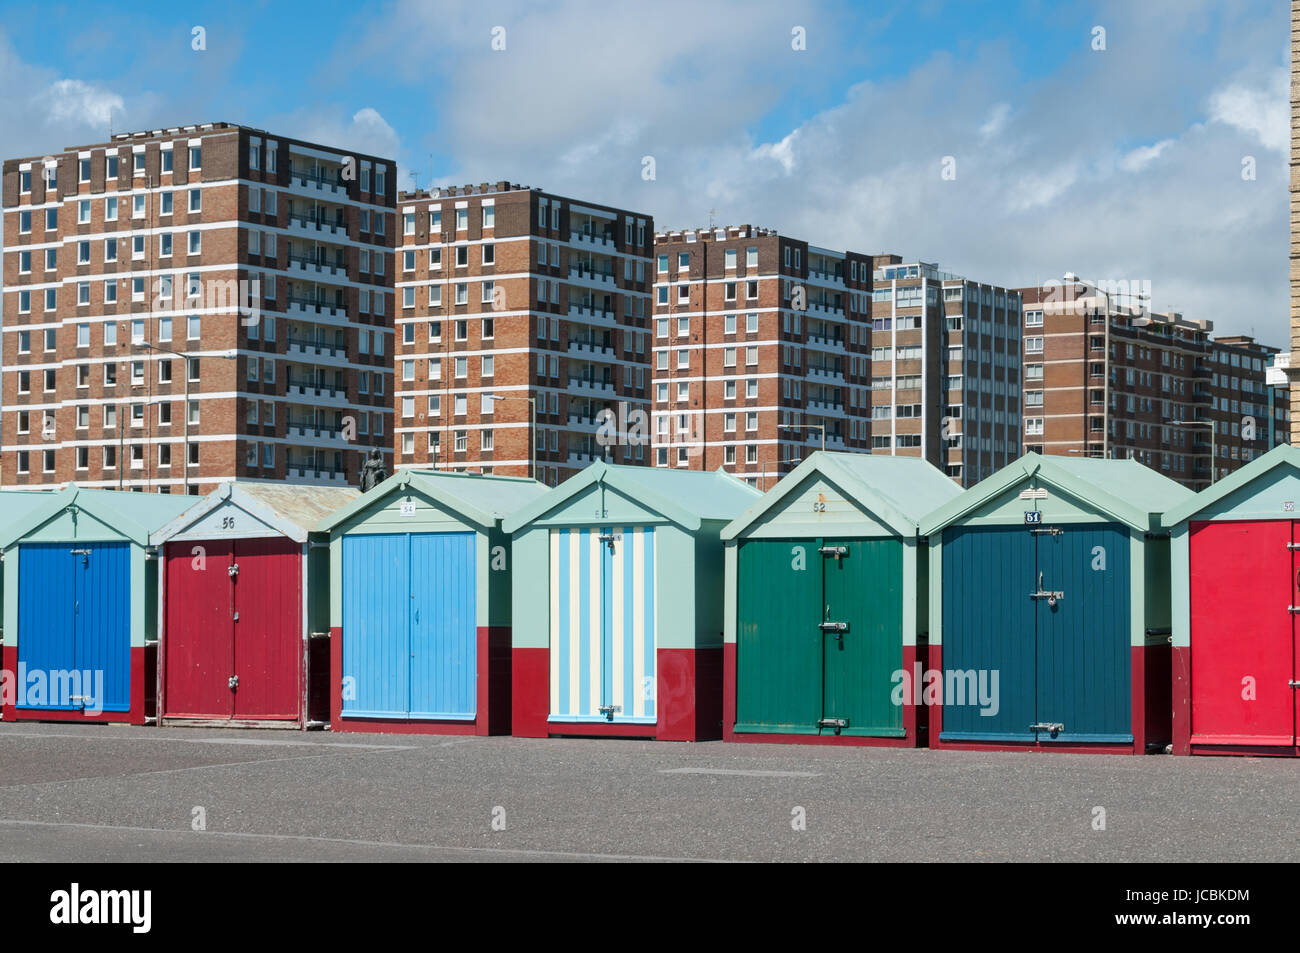 Hove beach huts, Royaume-Uni Banque D'Images